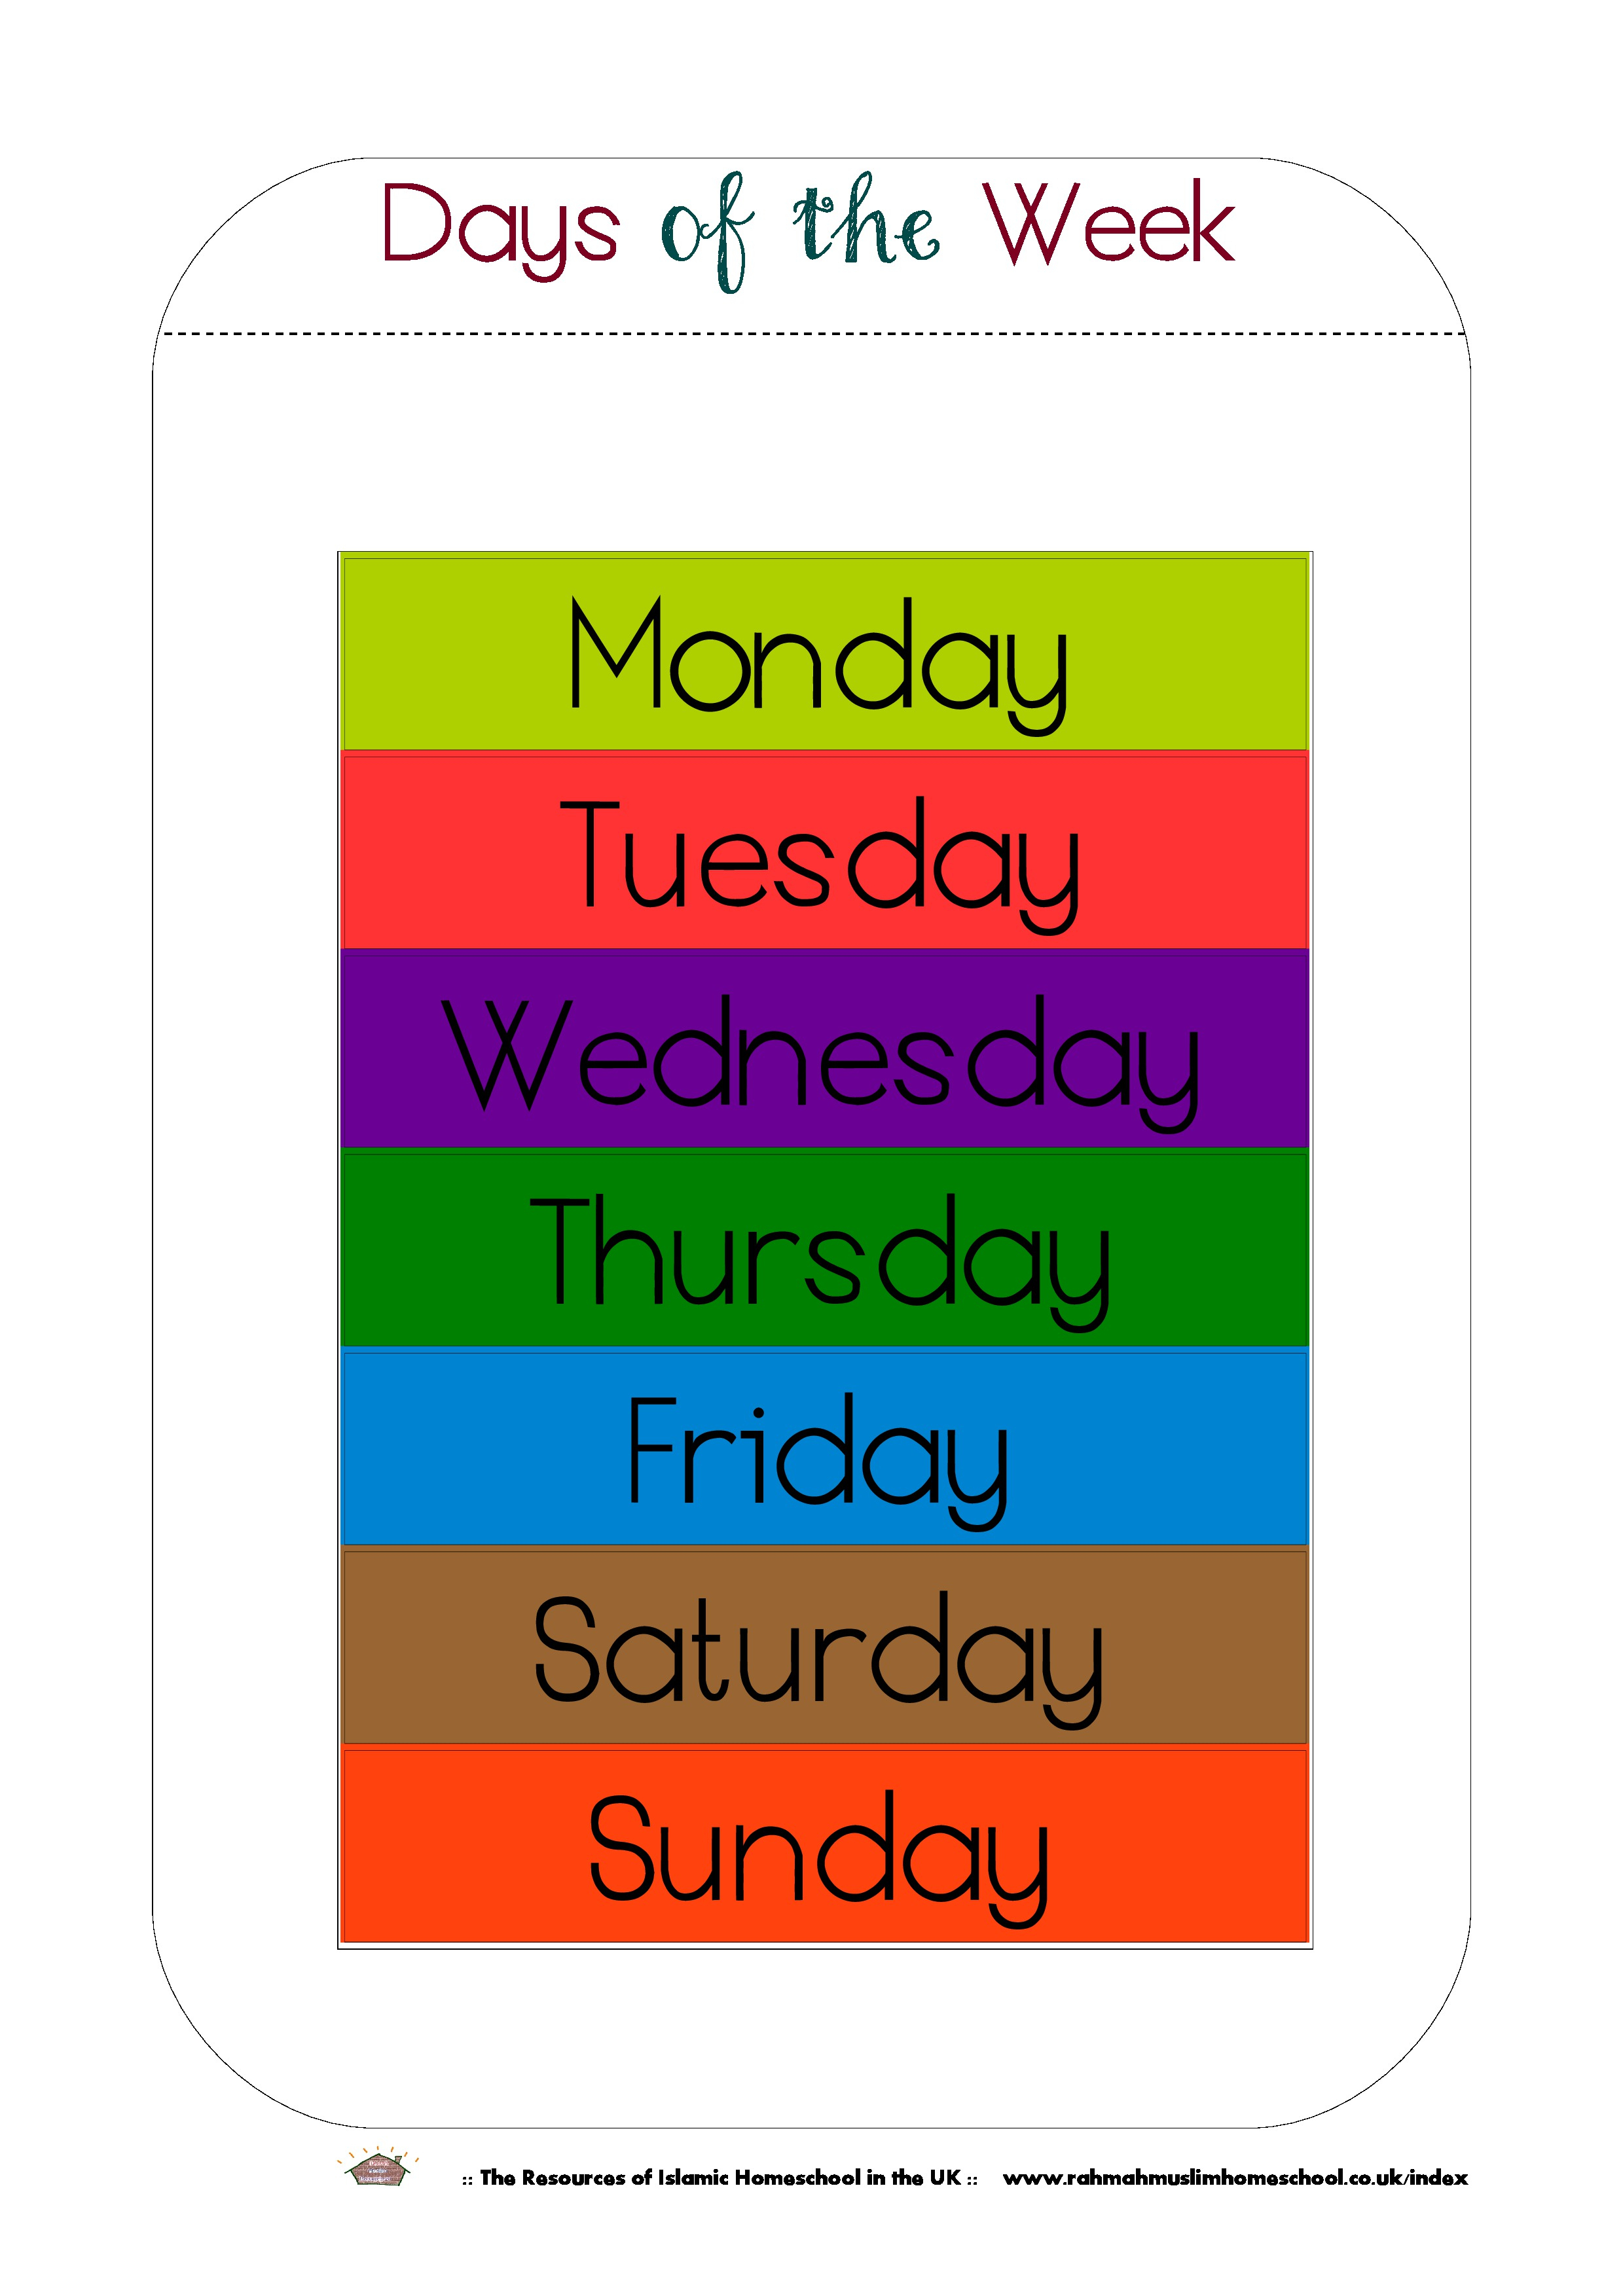 Free Printable Days Of The Week Workbook And Poster | The Resources - Free Printable Days Of The Week